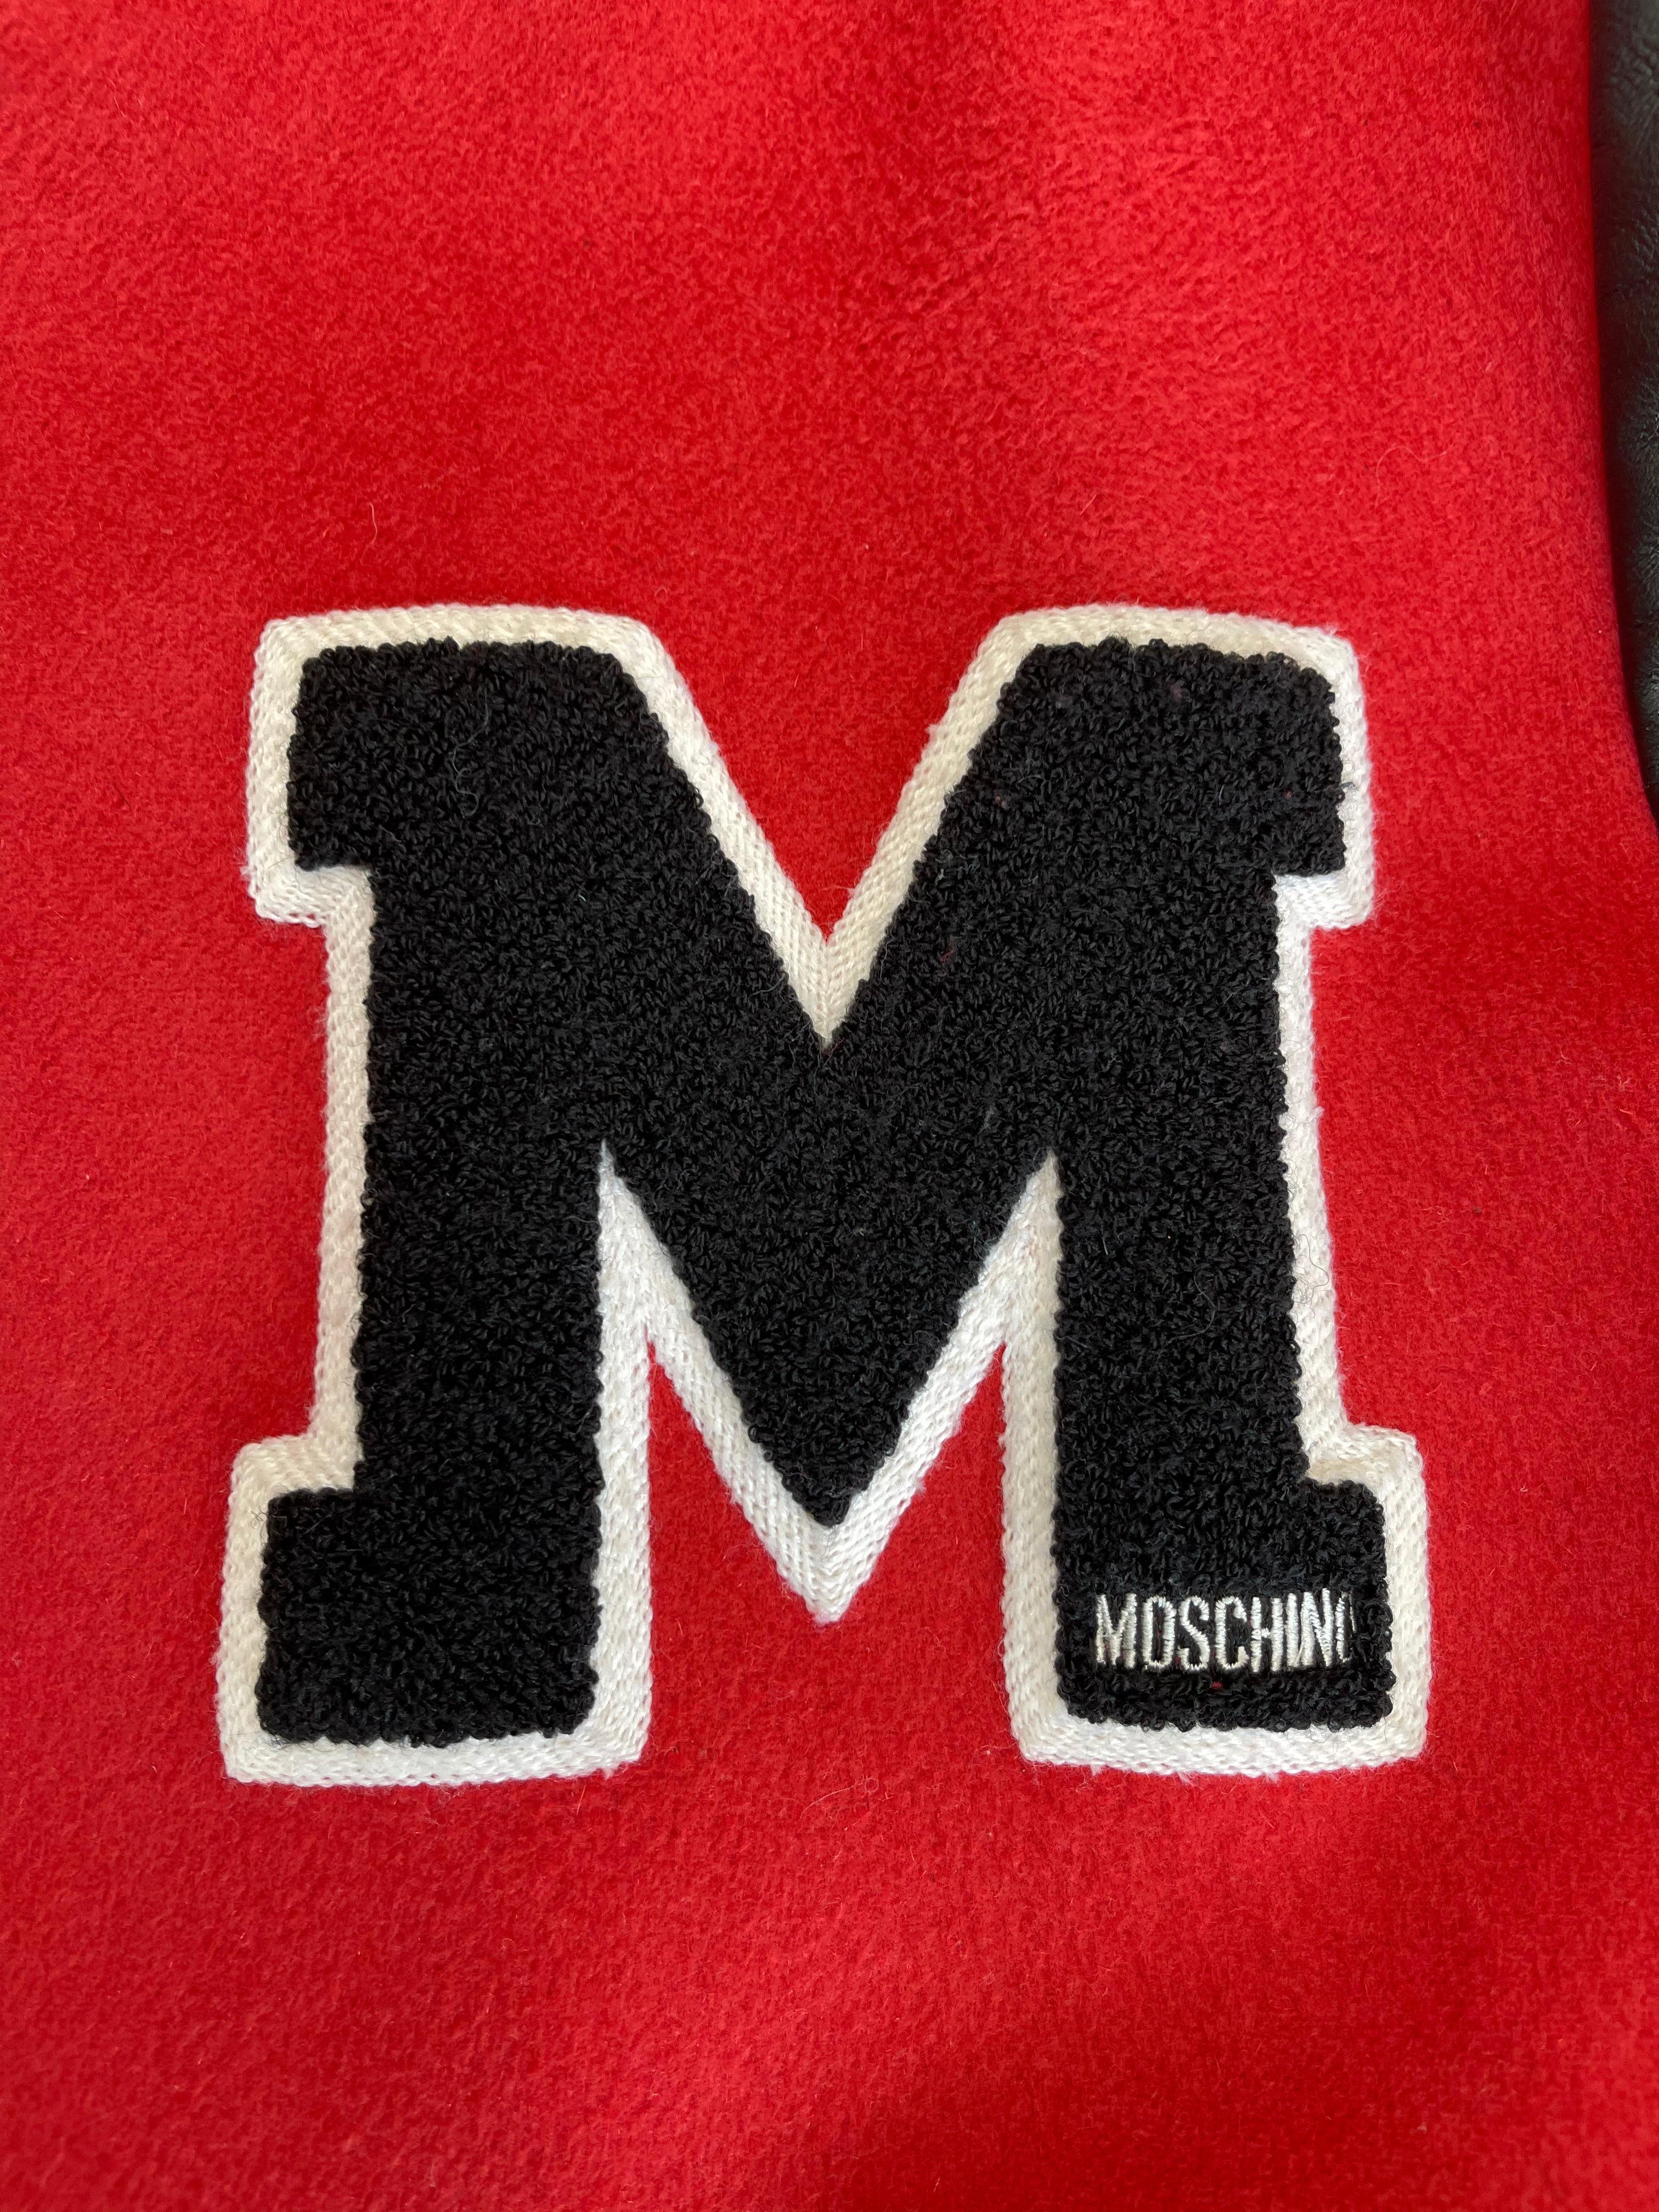 Men's Moschino Jeremy Scott Couture Leather Varsity Jacket (Medium) For Sale